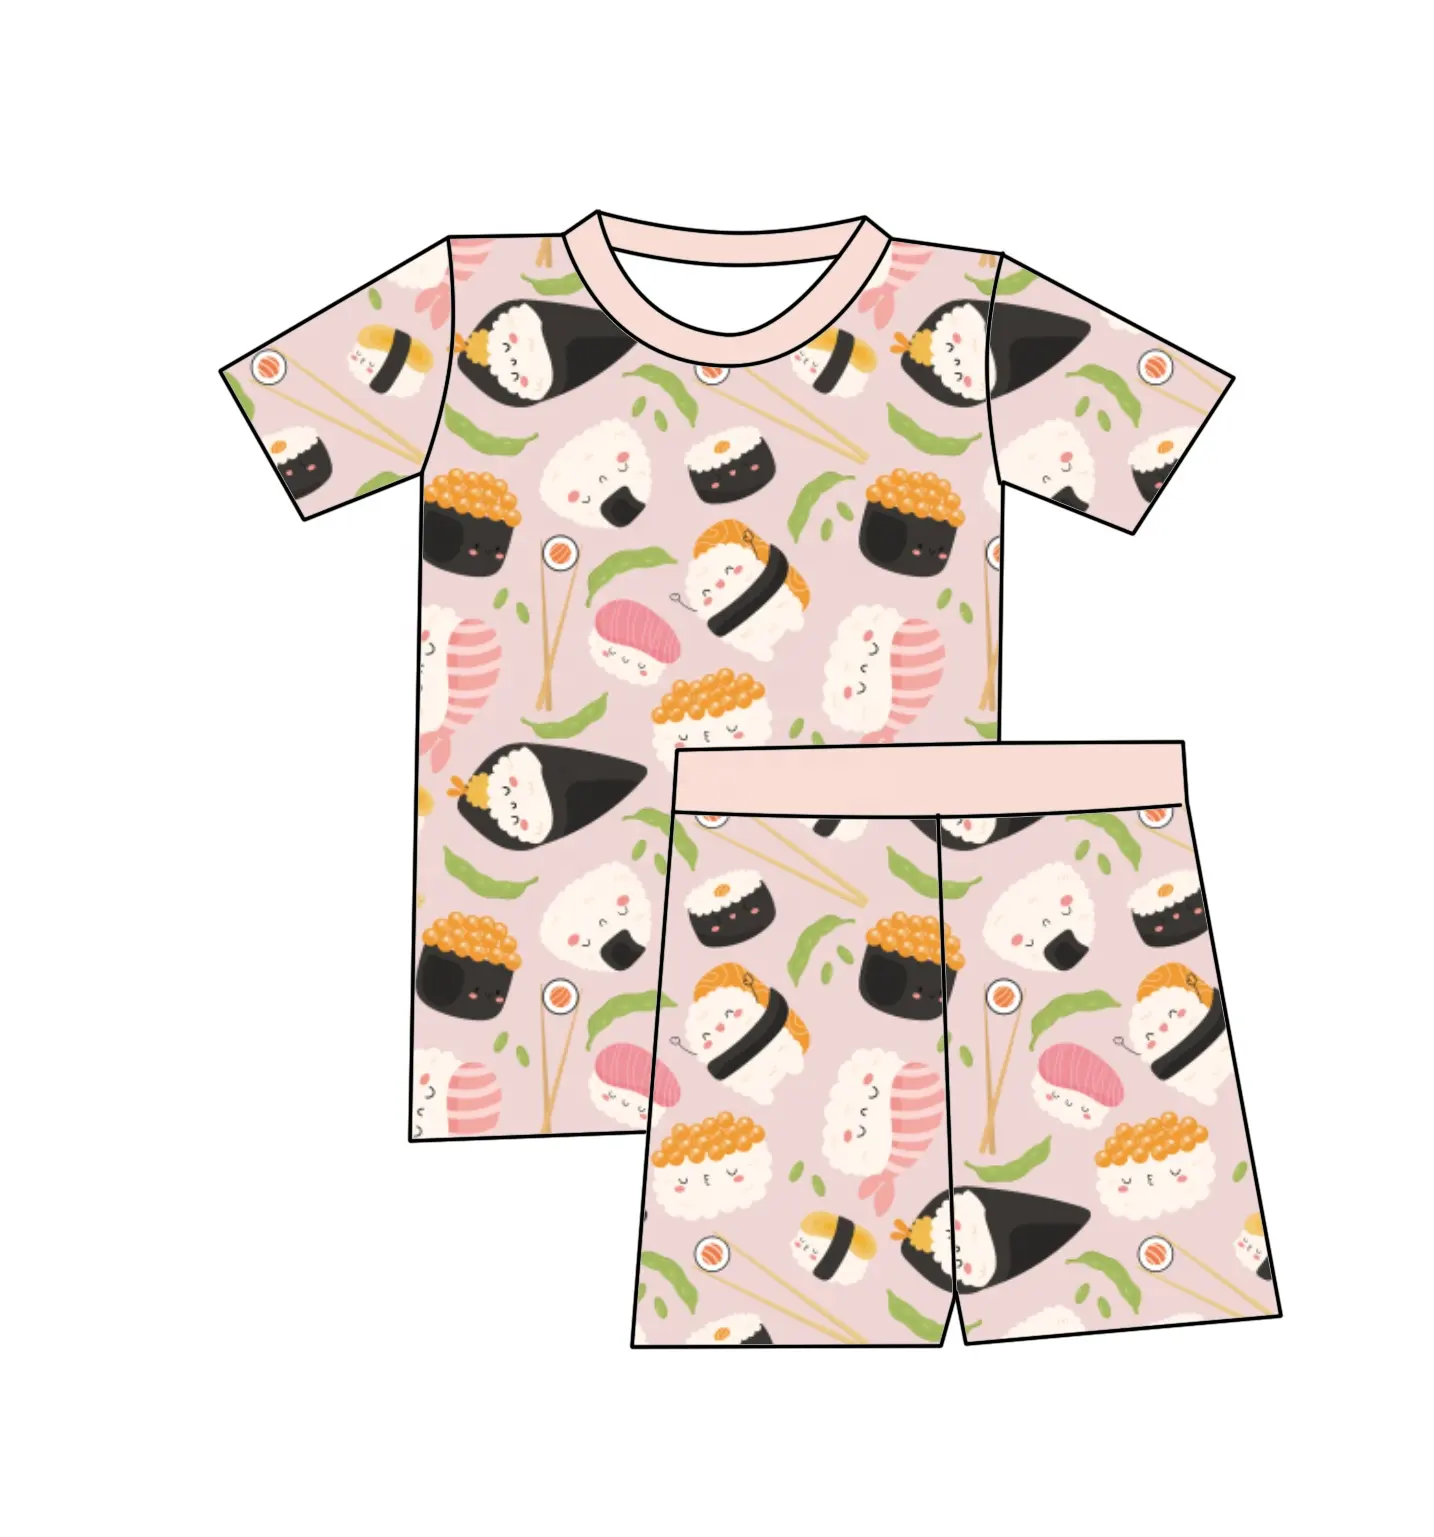 Liangzhe camiseta卸売新生児パジャマセットソフト半袖竹綿男の子女の子衣装2ピースベビー服